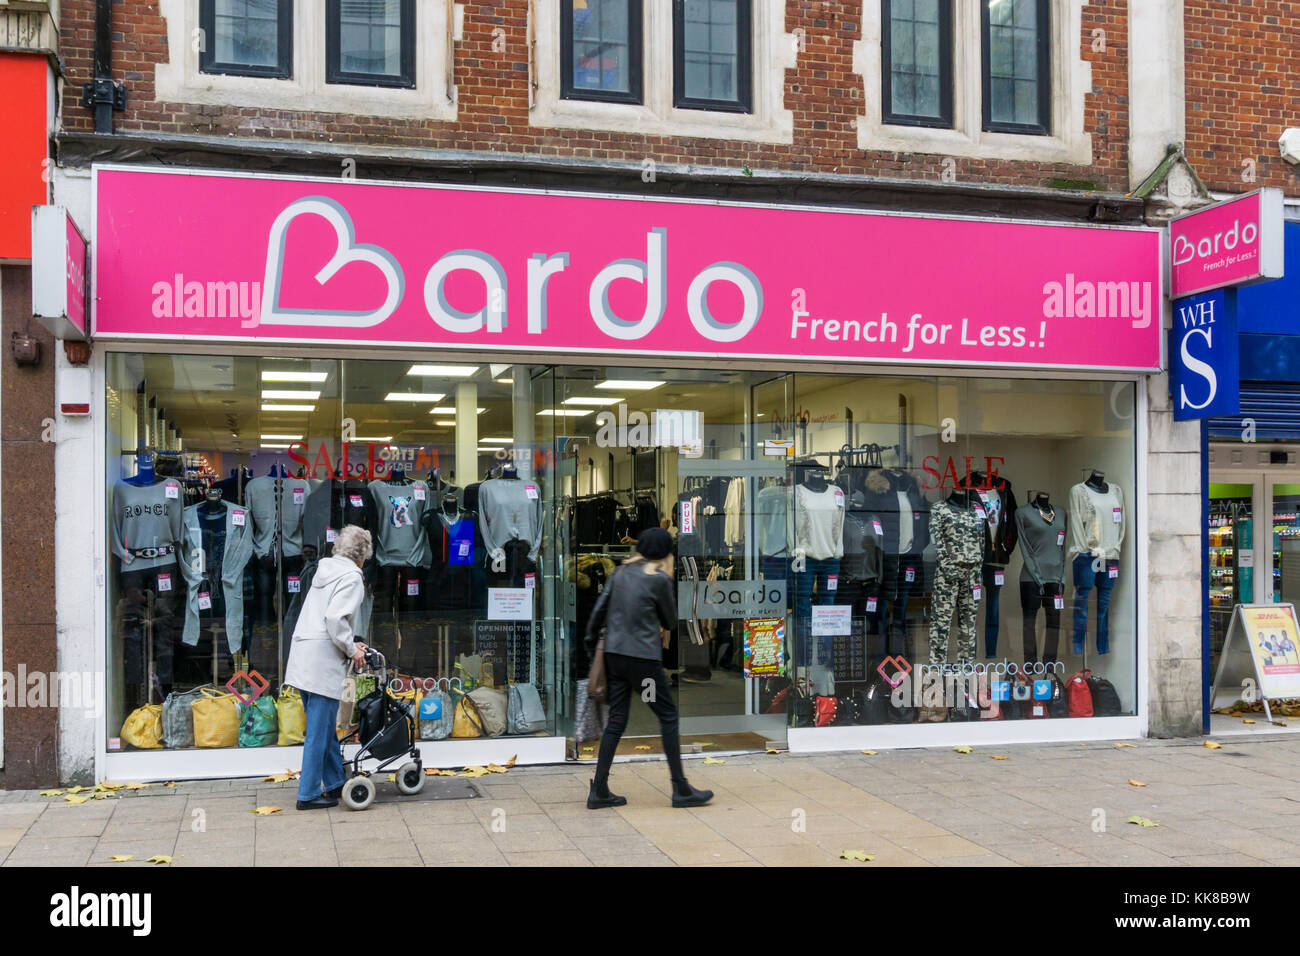 Bardo women's clothing shop in Croydon advertises French for less.! Stock Photo